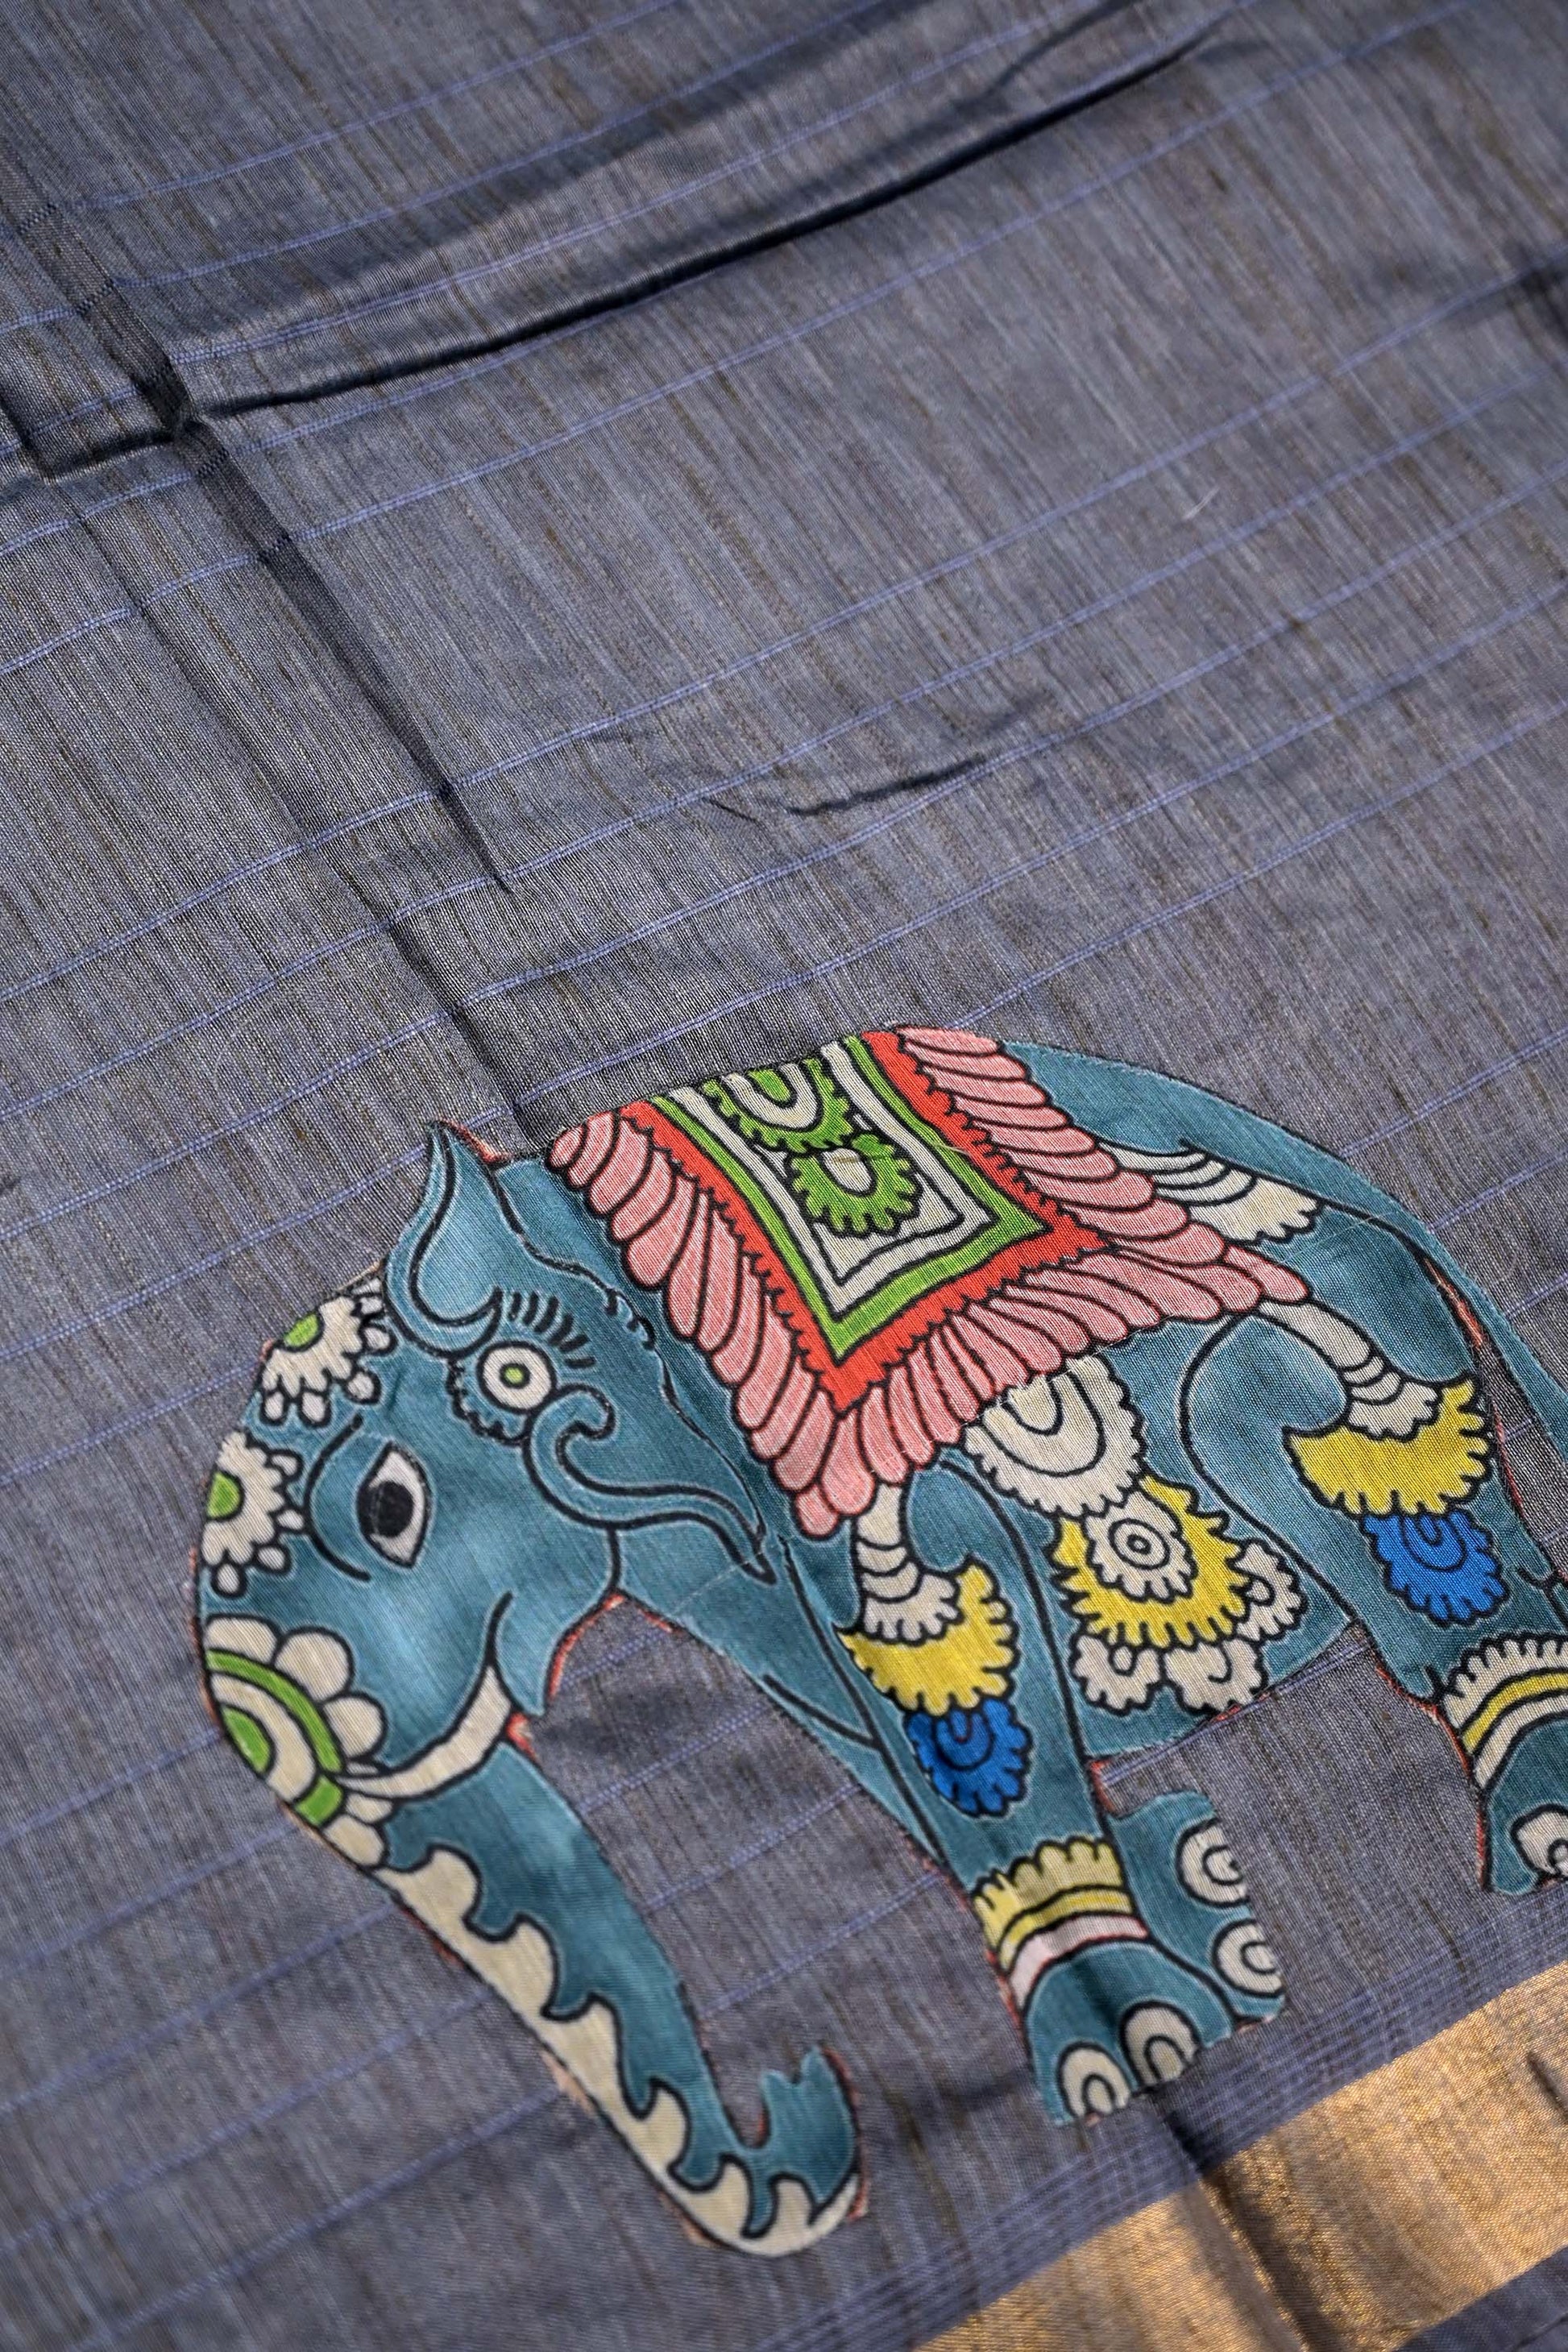 Tussar jute saree light grey color with kalamkari prints, big printed pallu, small kaddi border and printed blouse